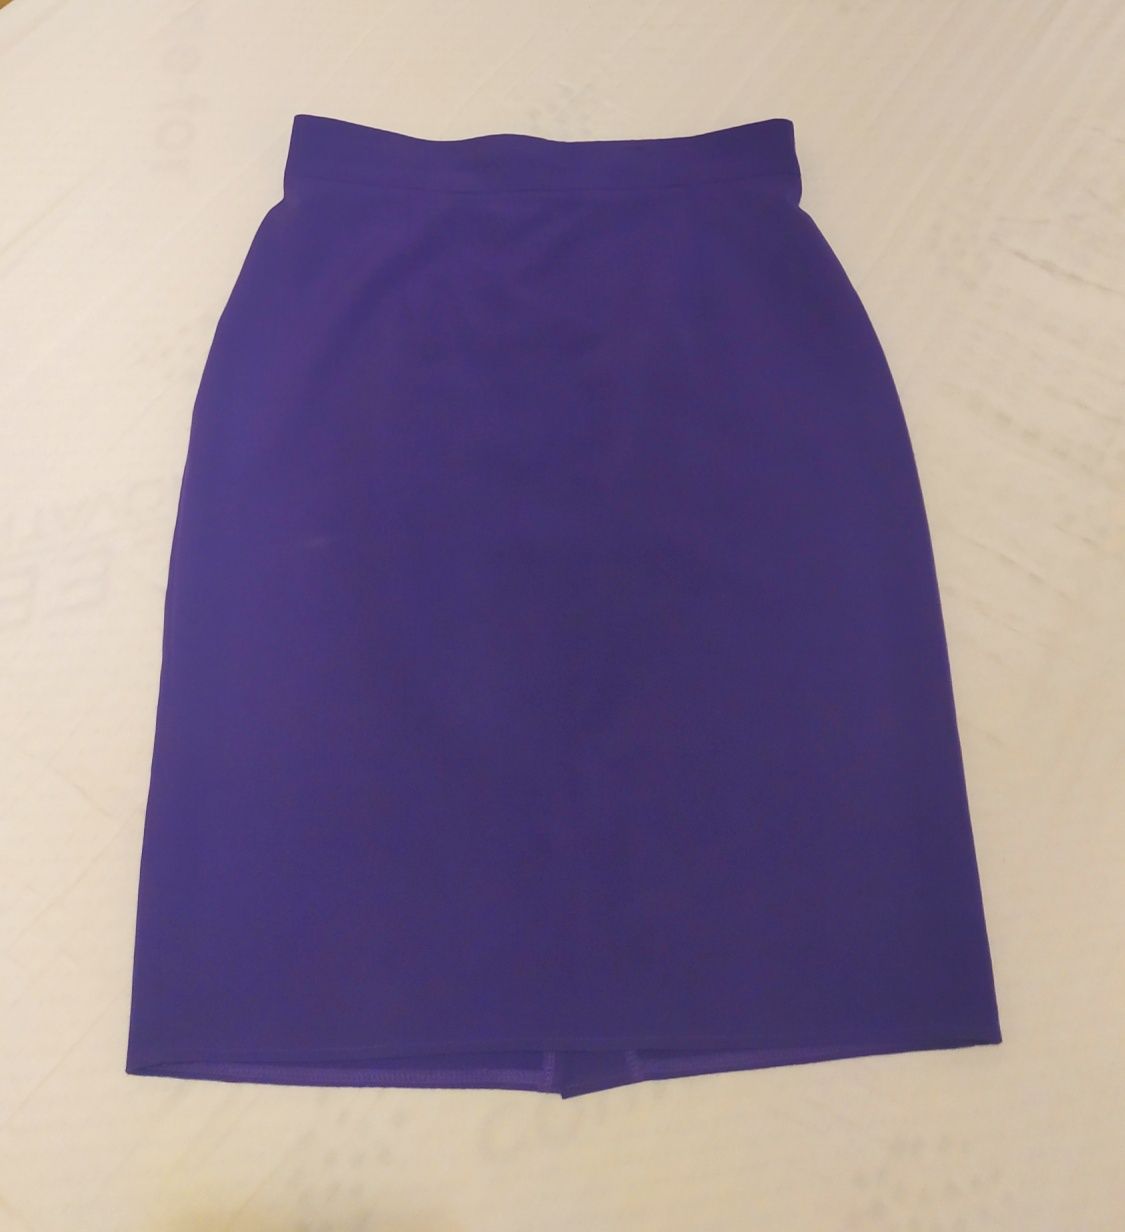 Костюм женский классический жакет юбка от бренда Adele Leroy